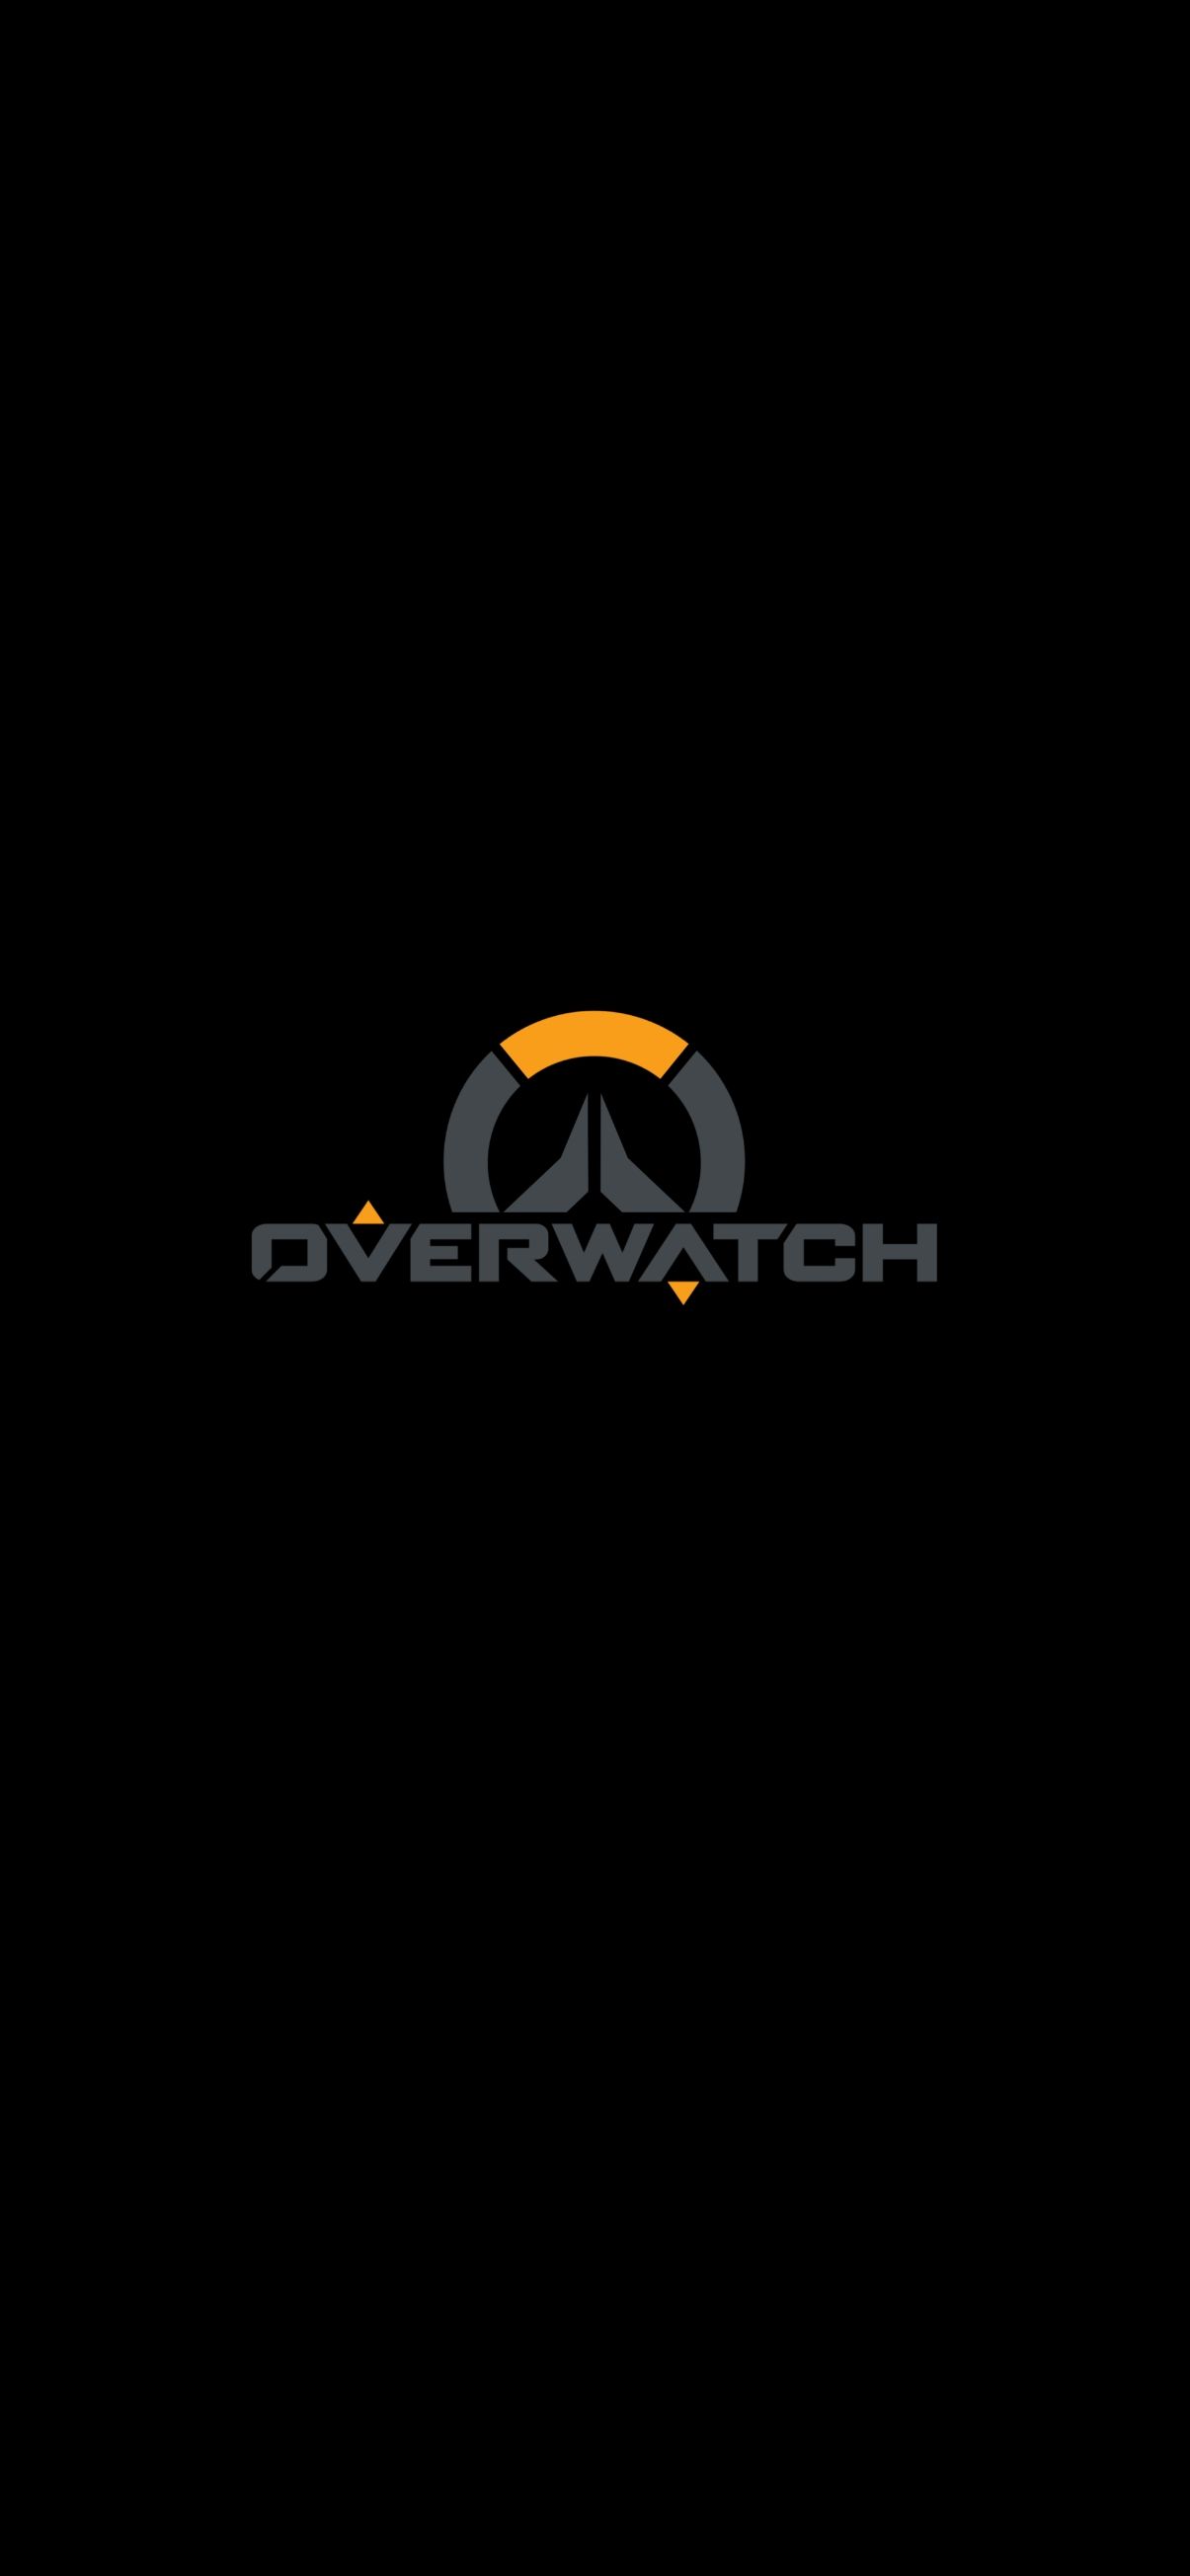 Reinhardt Dragon Slayer Overwatch wallpaper iphone se